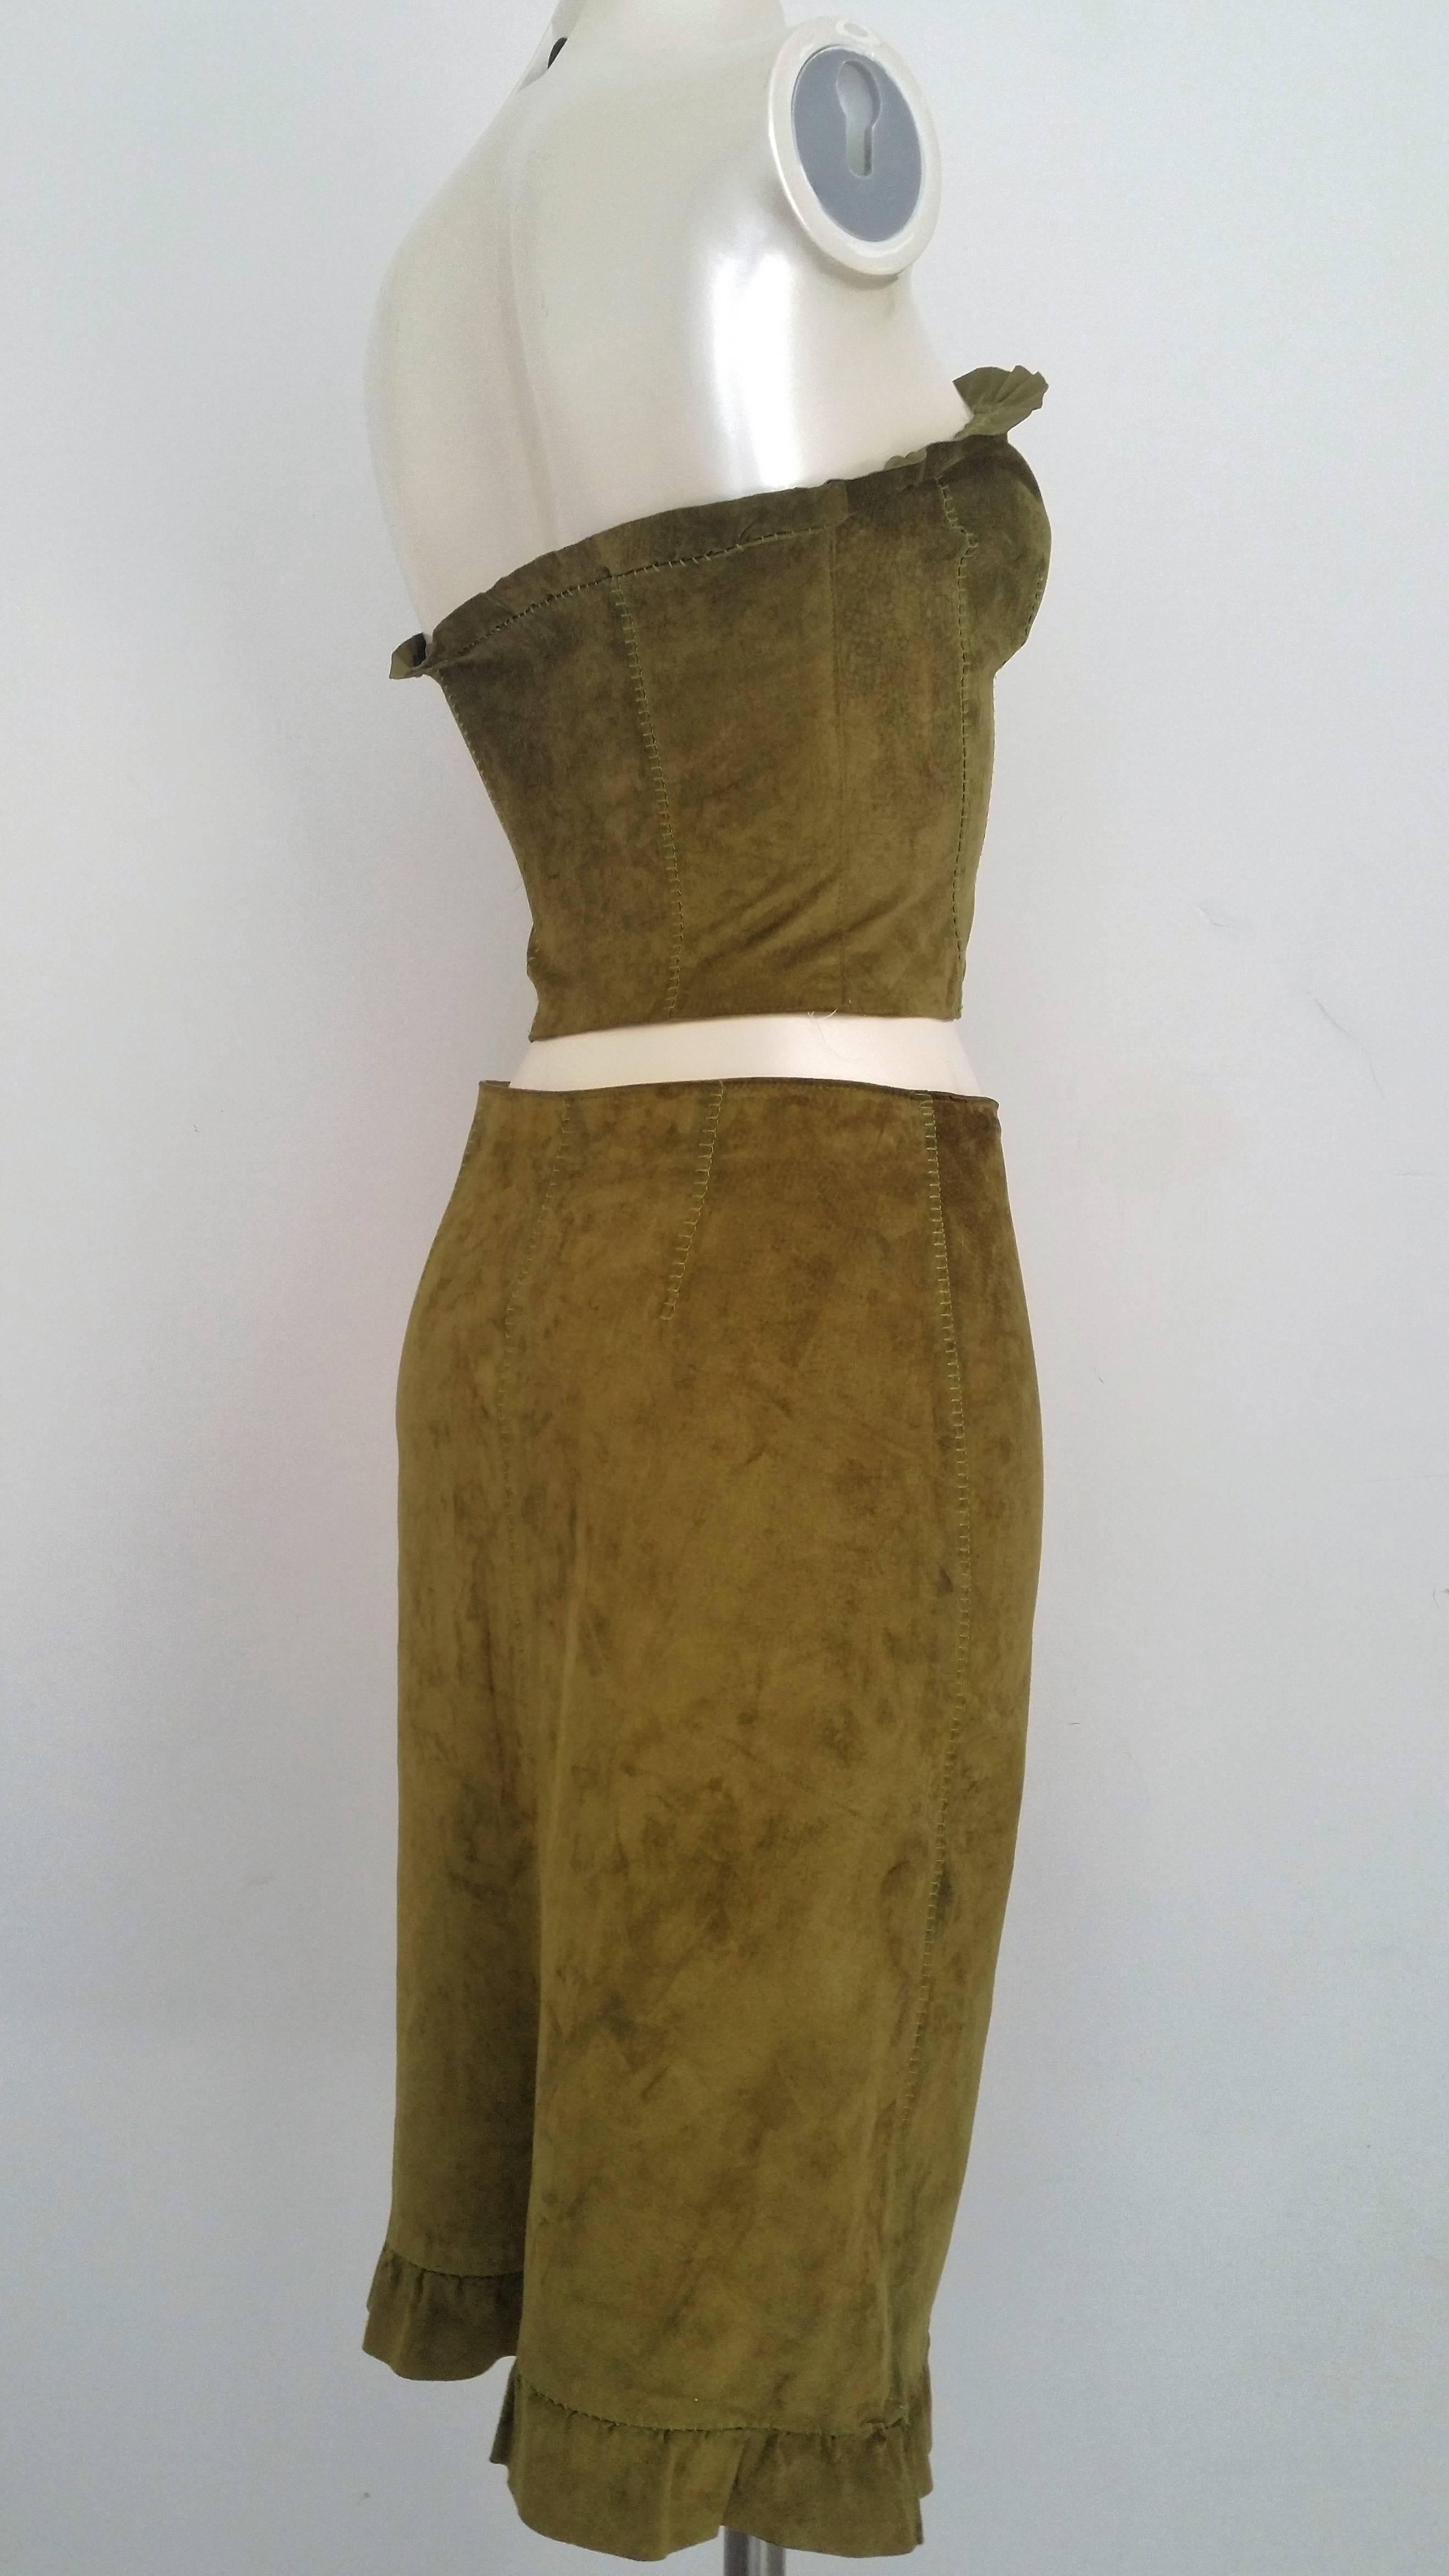 Women's 1990s Alberta Ferretti green leather top and skirt